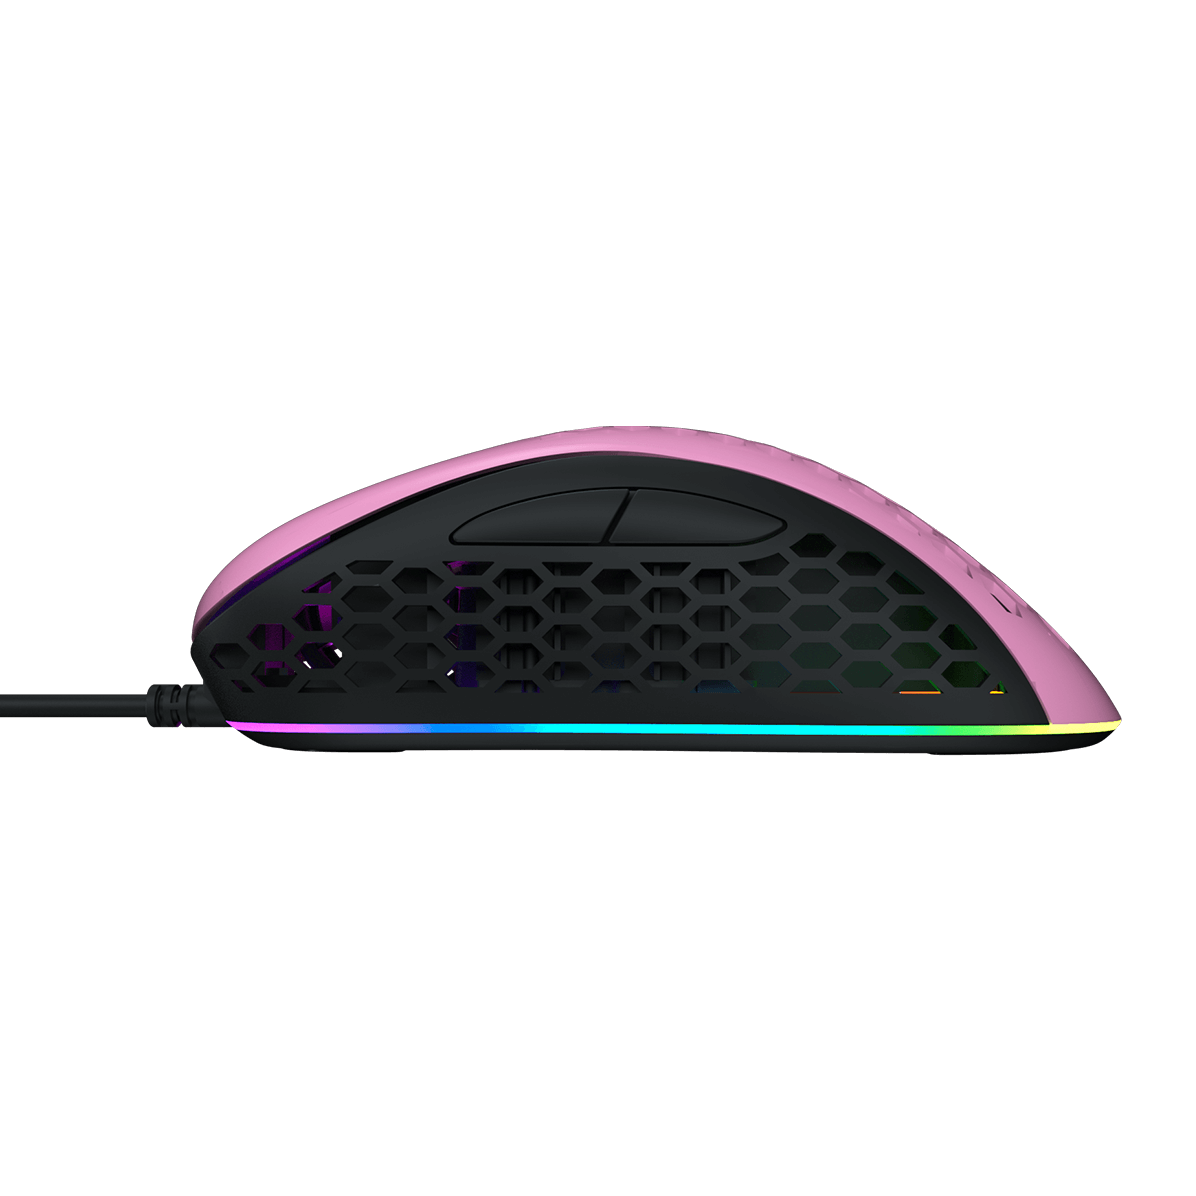 UVI Lust GALLASANDALLA lightweight gaming mouse